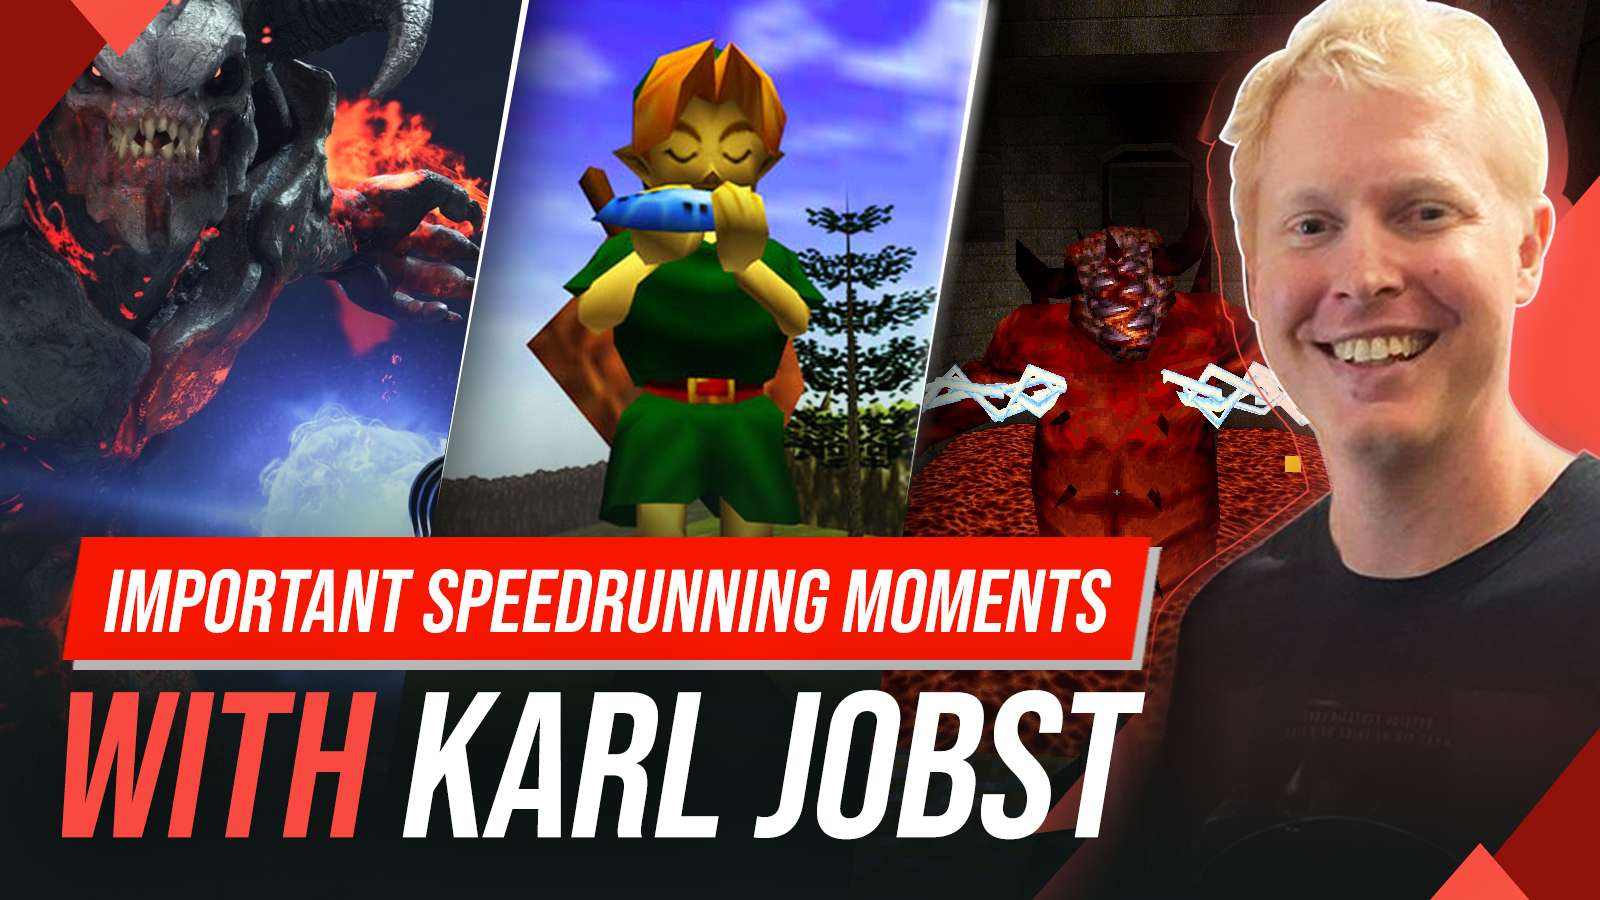 Karl Jobst and speedrunning games